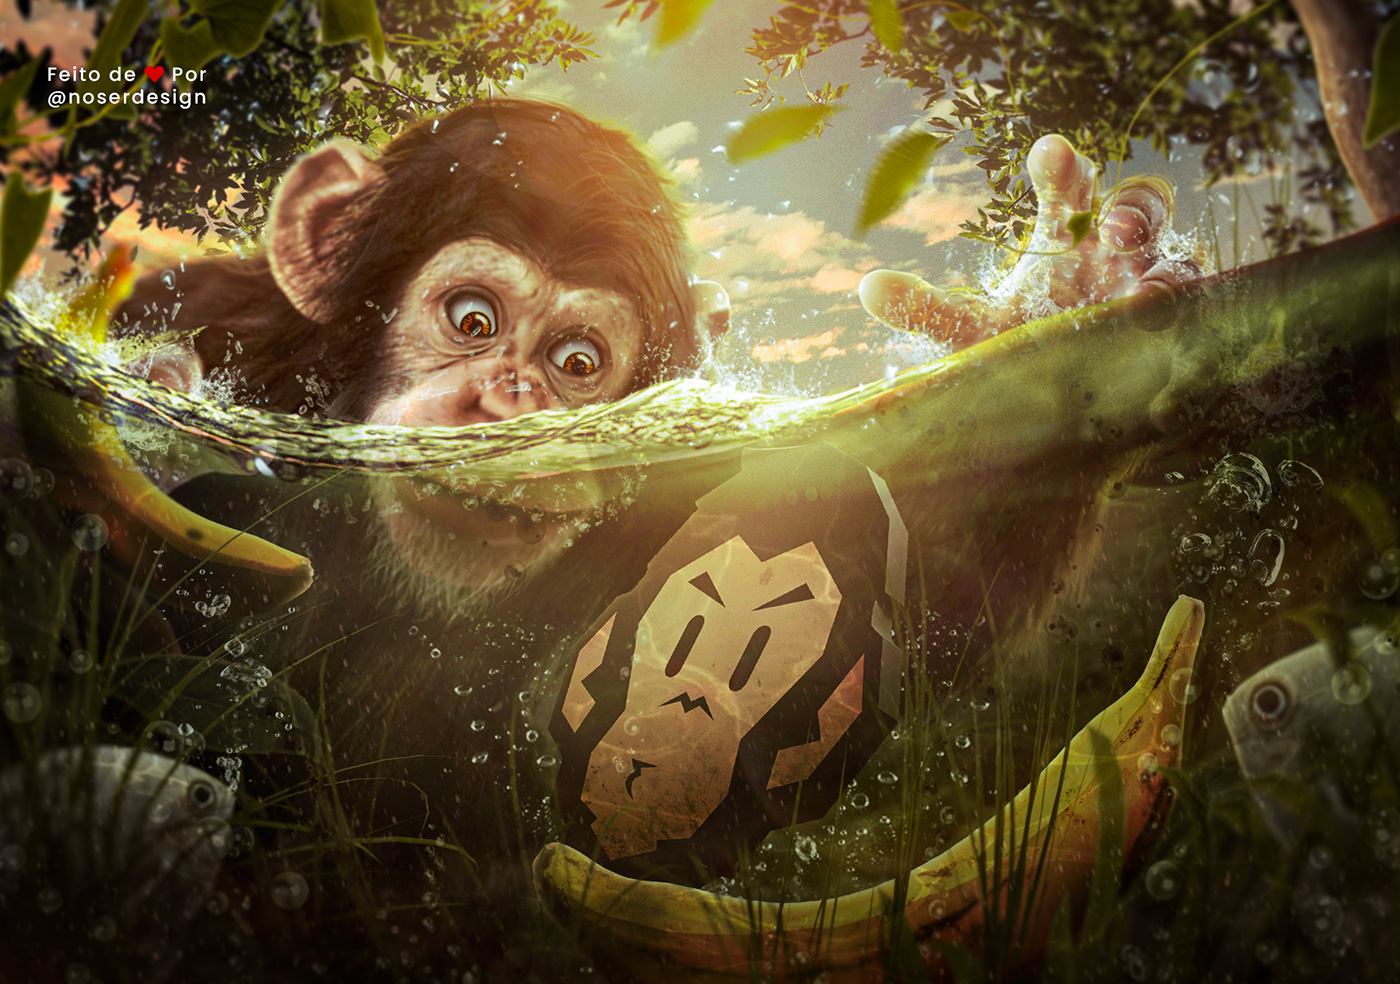 aquatic Macaco Manipulação de imagem manipulation monkey photoshop social media Social media post splash water